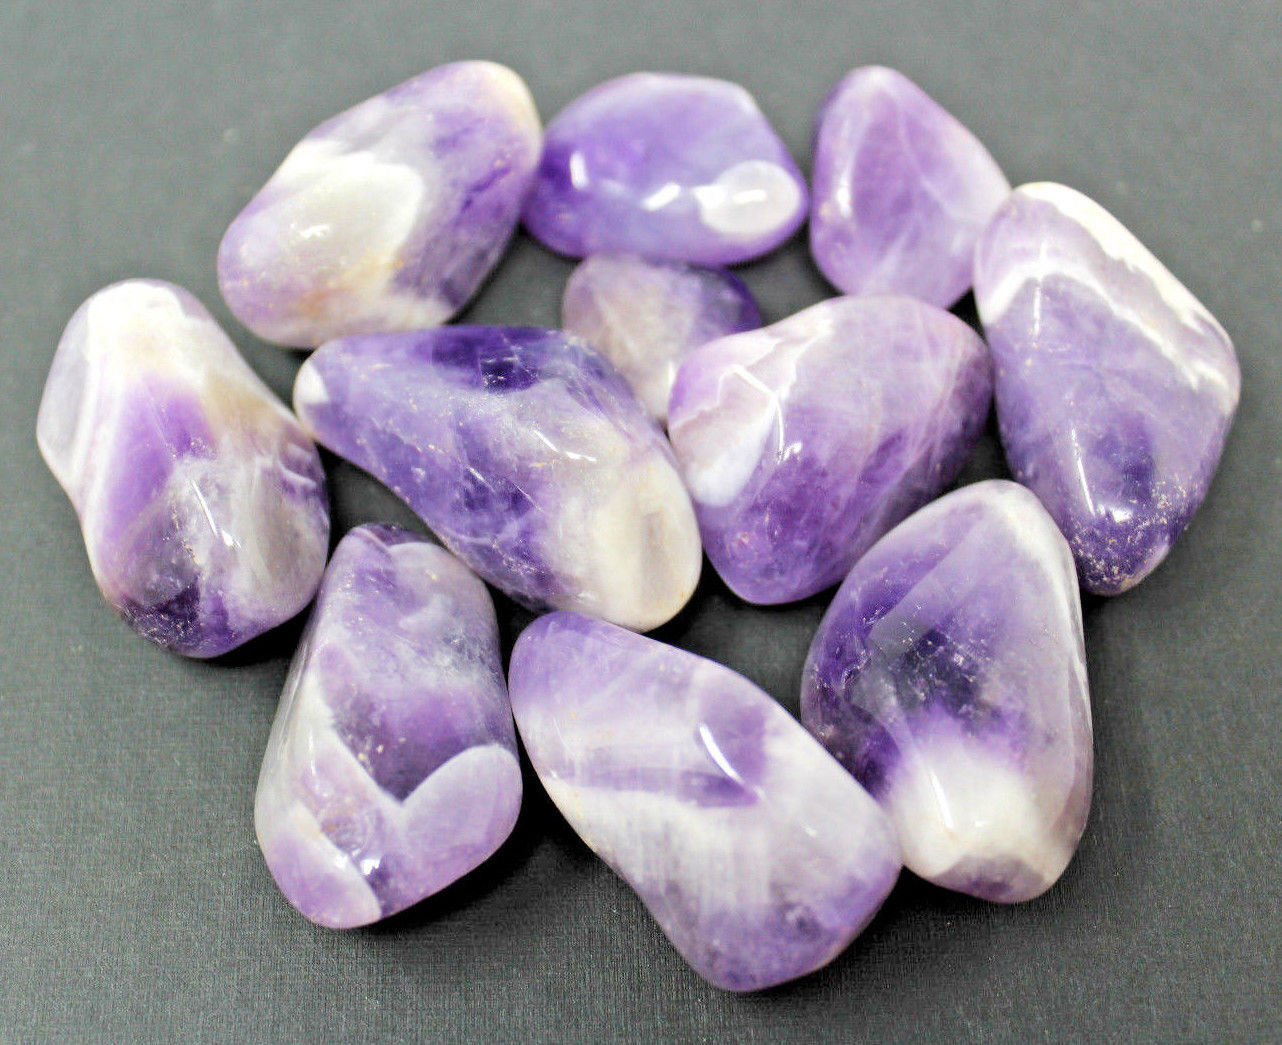 2 oz Tumbled Stones - Choose Type: SALE BUY 3 GET 1 FREE (Crystal Healing)